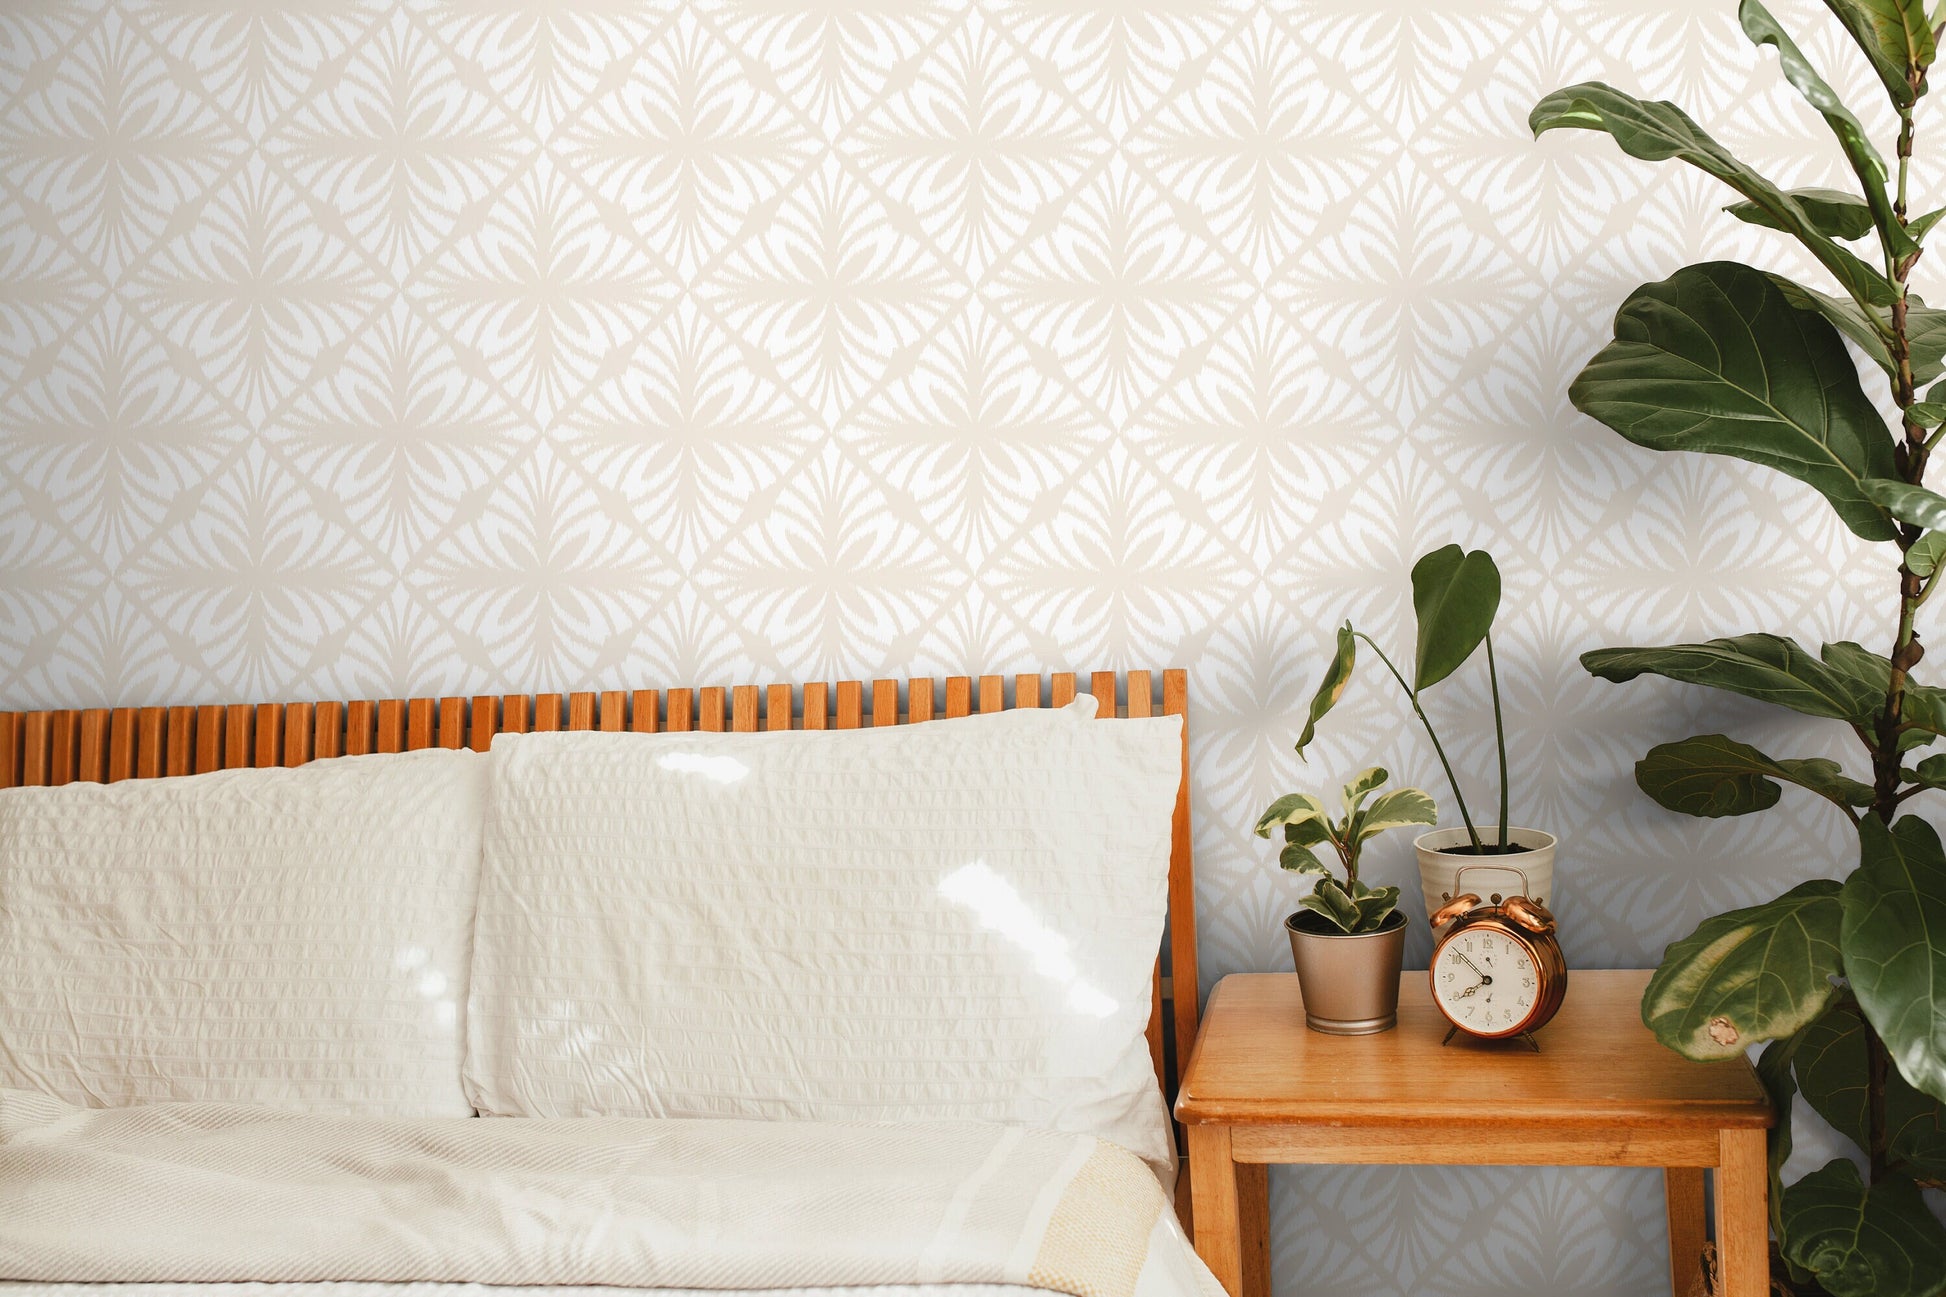 Neutral Floral Tile Wallpaper / Peel and Stick Wallpaper Removable Wallpaper Home Decor Wall Art Wall Decor Room Decor - C748